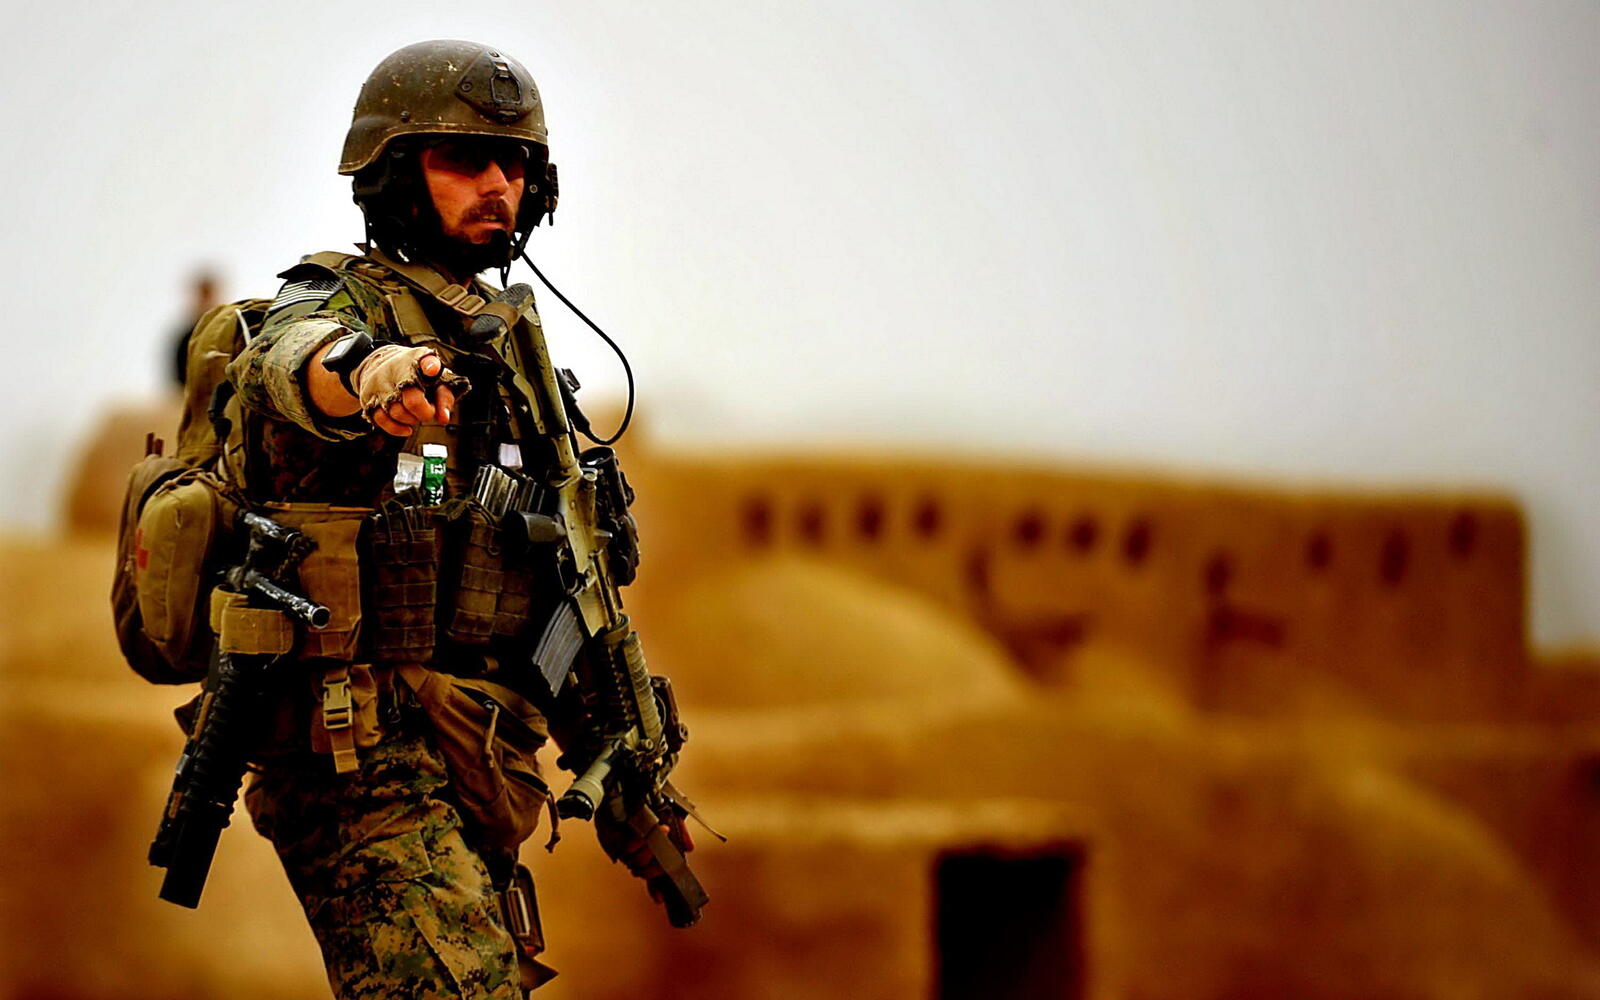 Wallpapers soldier suit uniform on the desktop